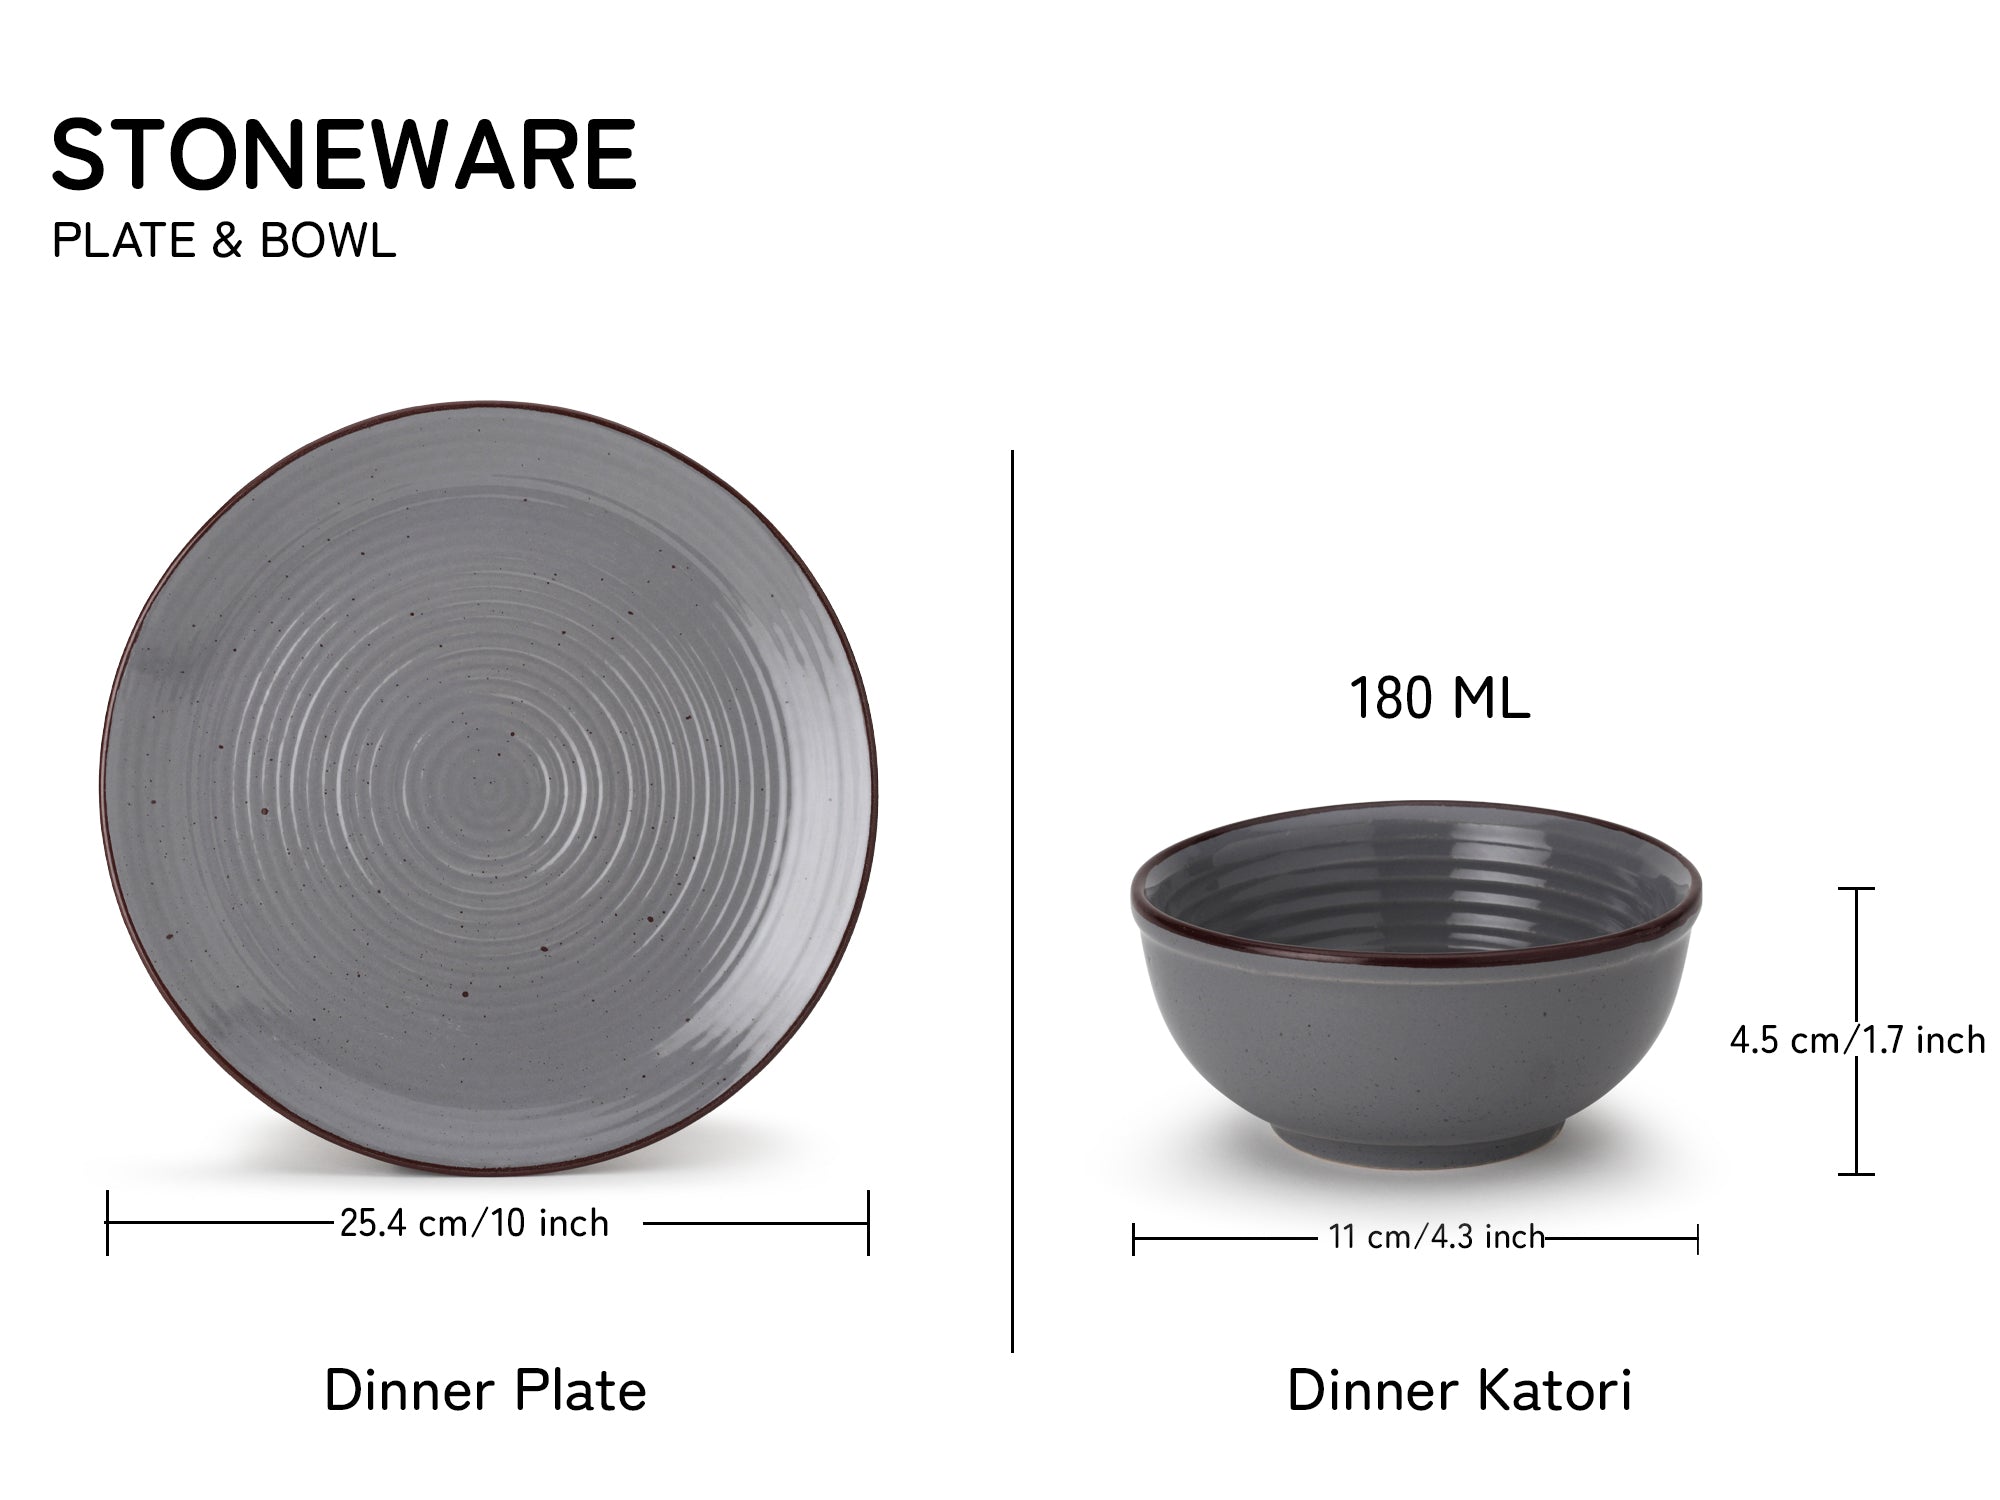 Graphite Noir Dining Ensemble - 2 Dinner Plates & 2 Bowls/Katoris